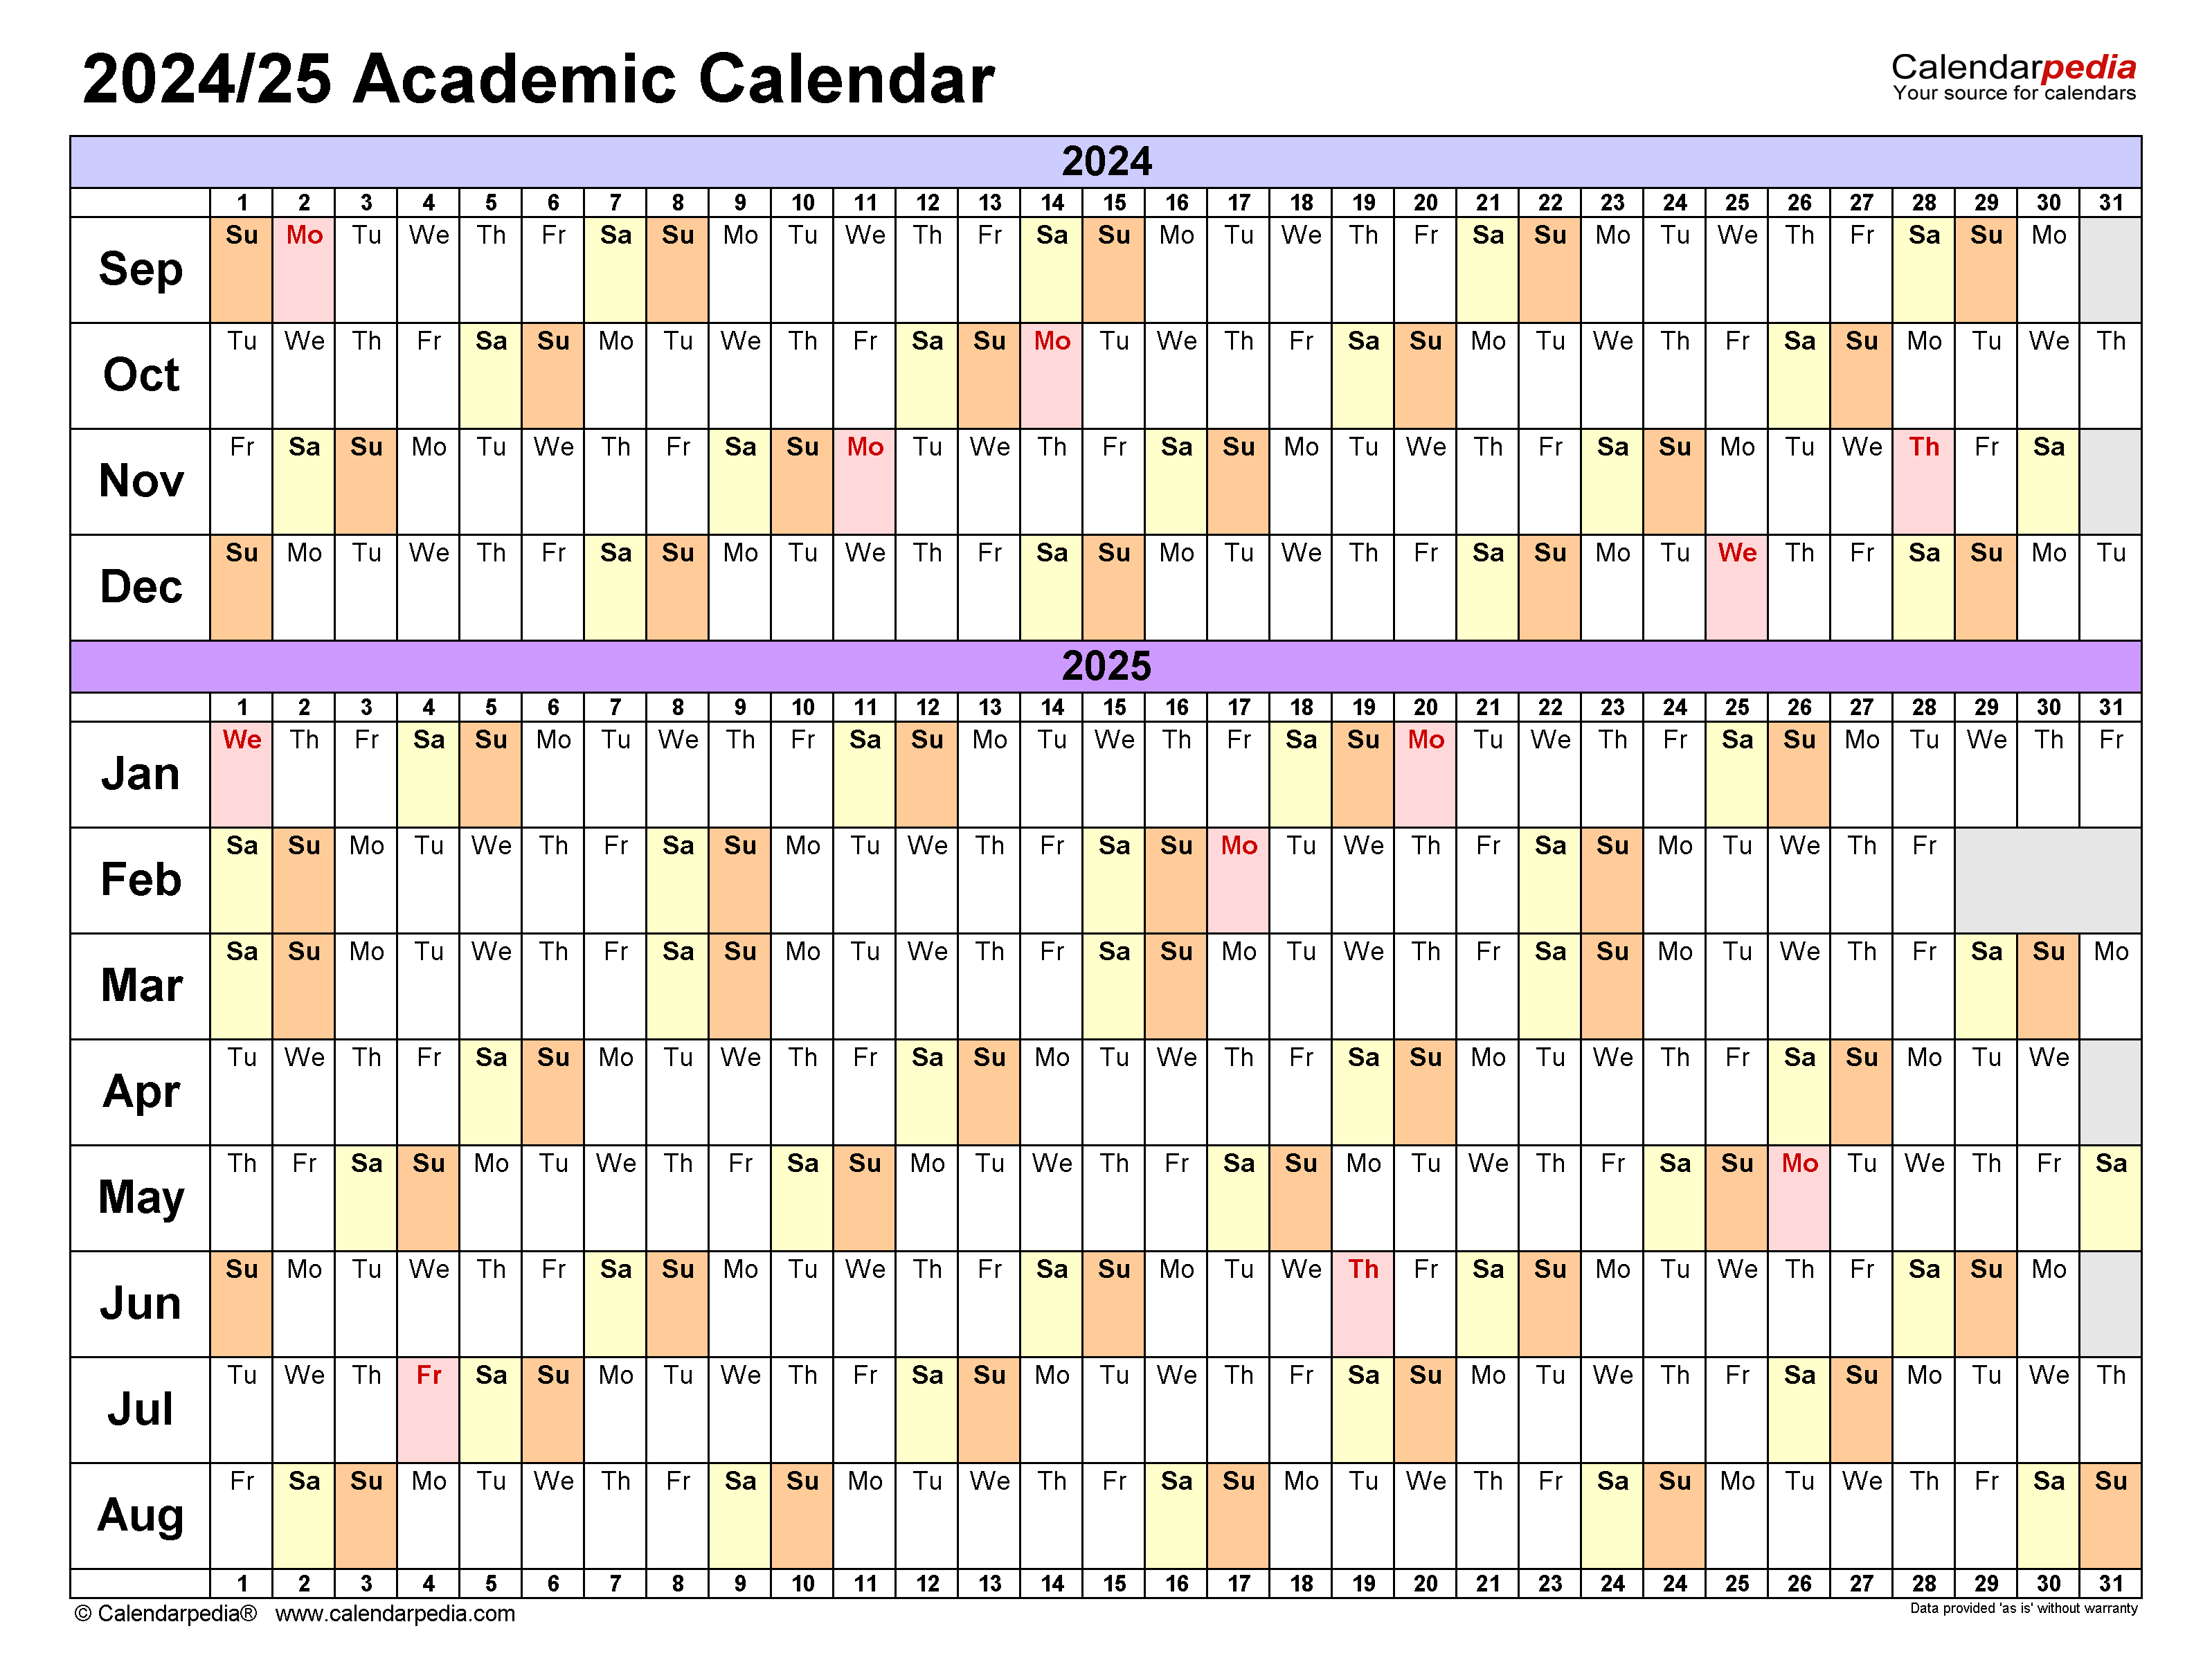 Utd Academic Calendar 2025 lindi brianna